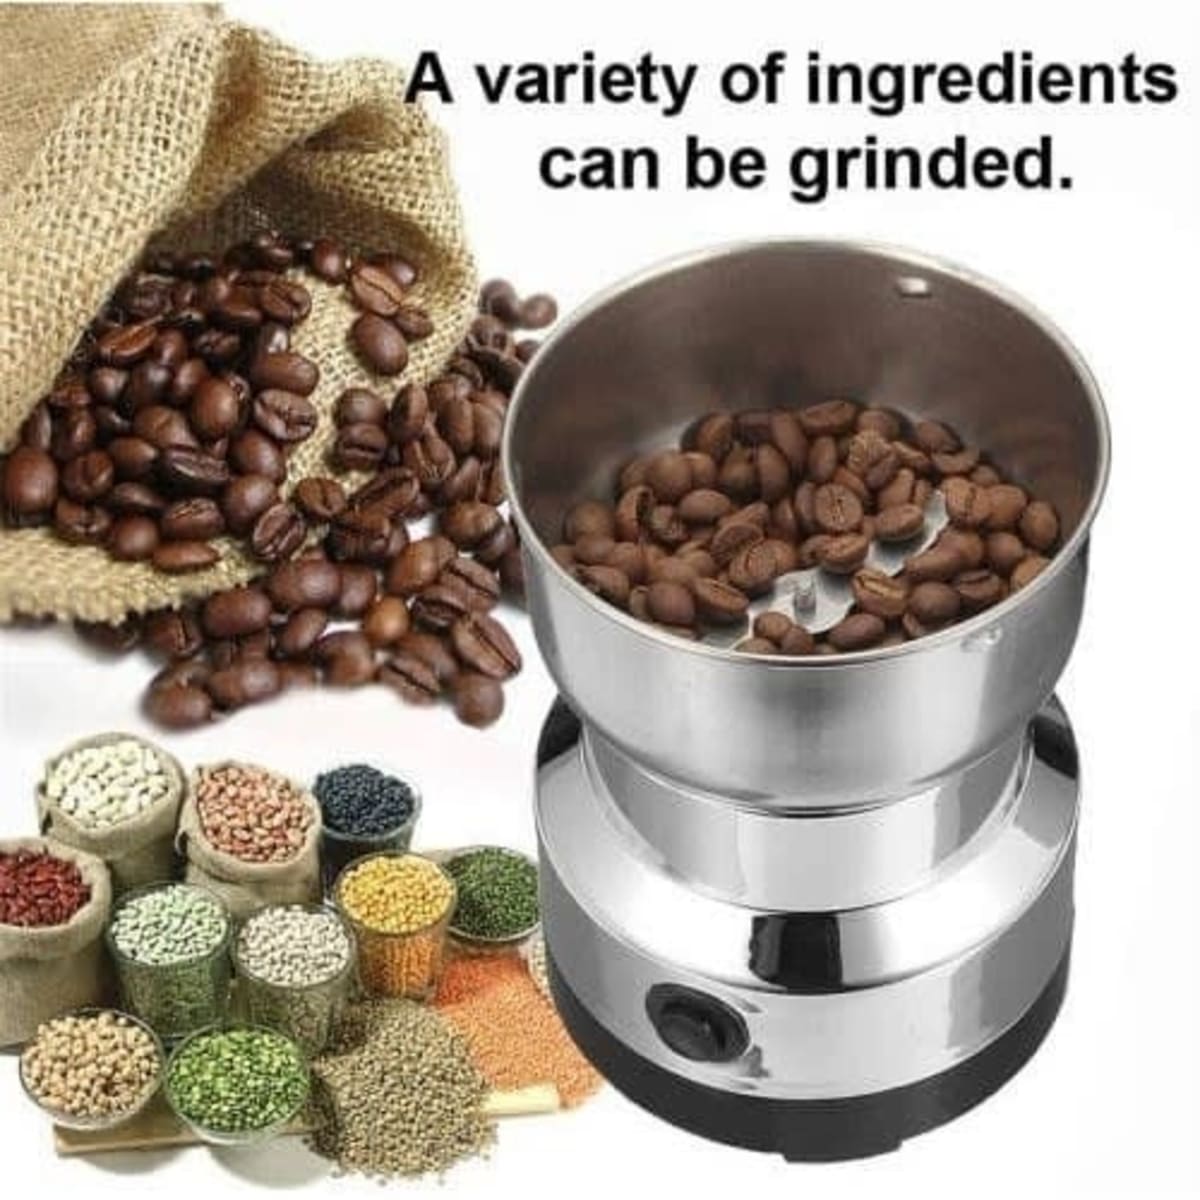 Spice and Nut Grinder, Grinding & Seasoning